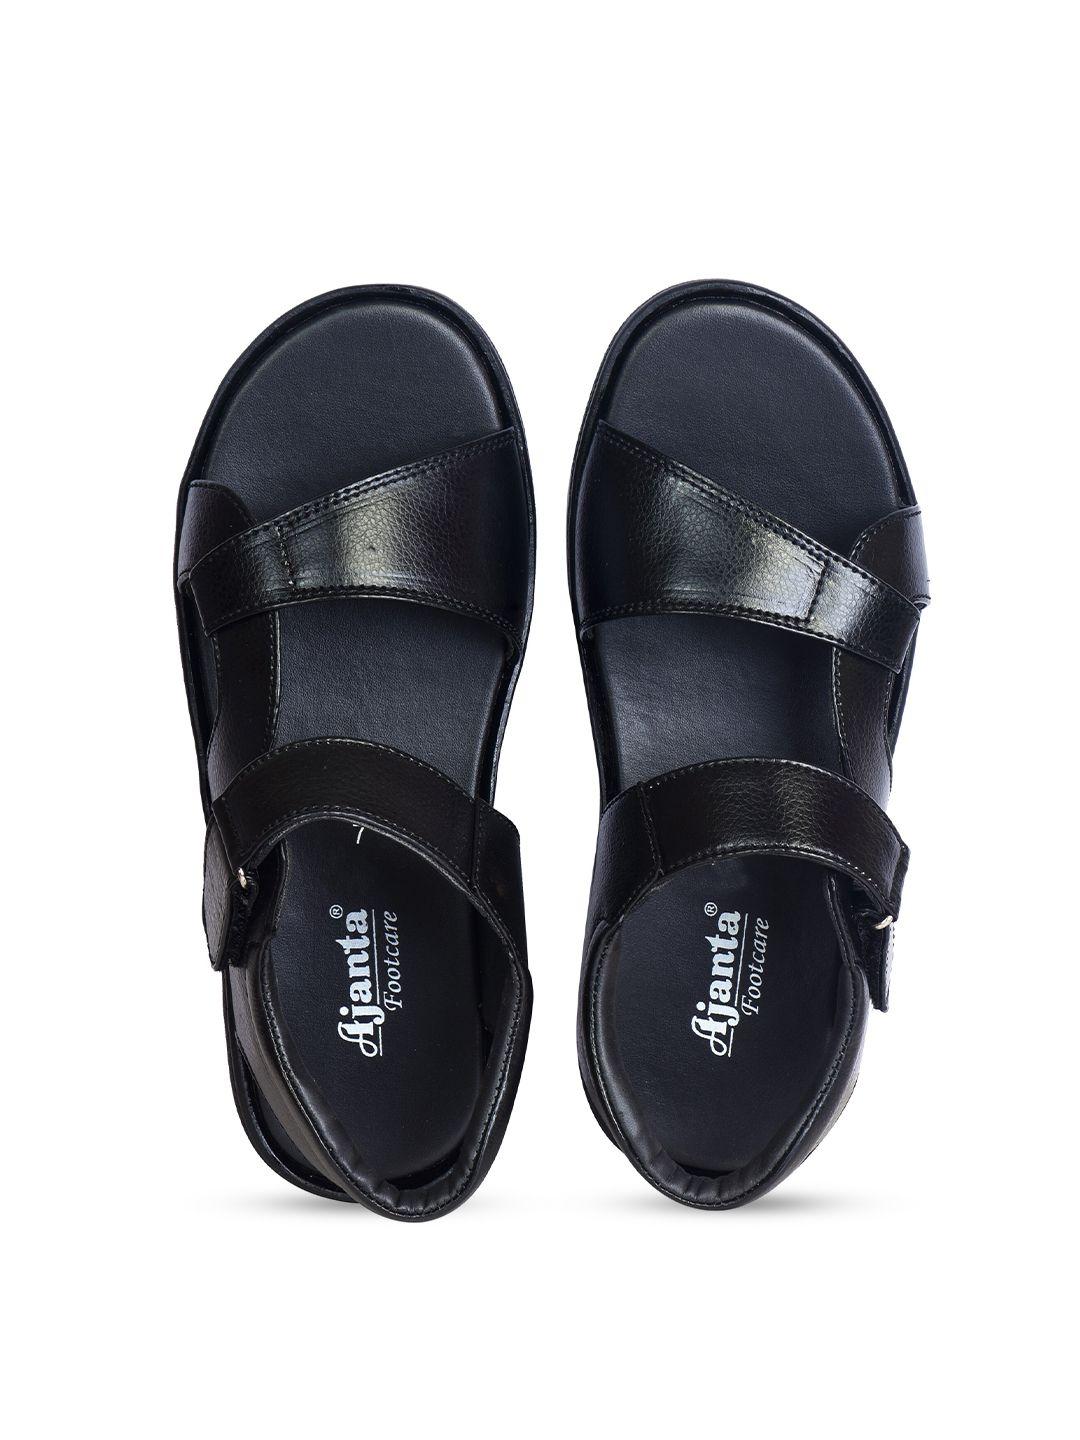 Ajanta Men Black Comfort Sandals